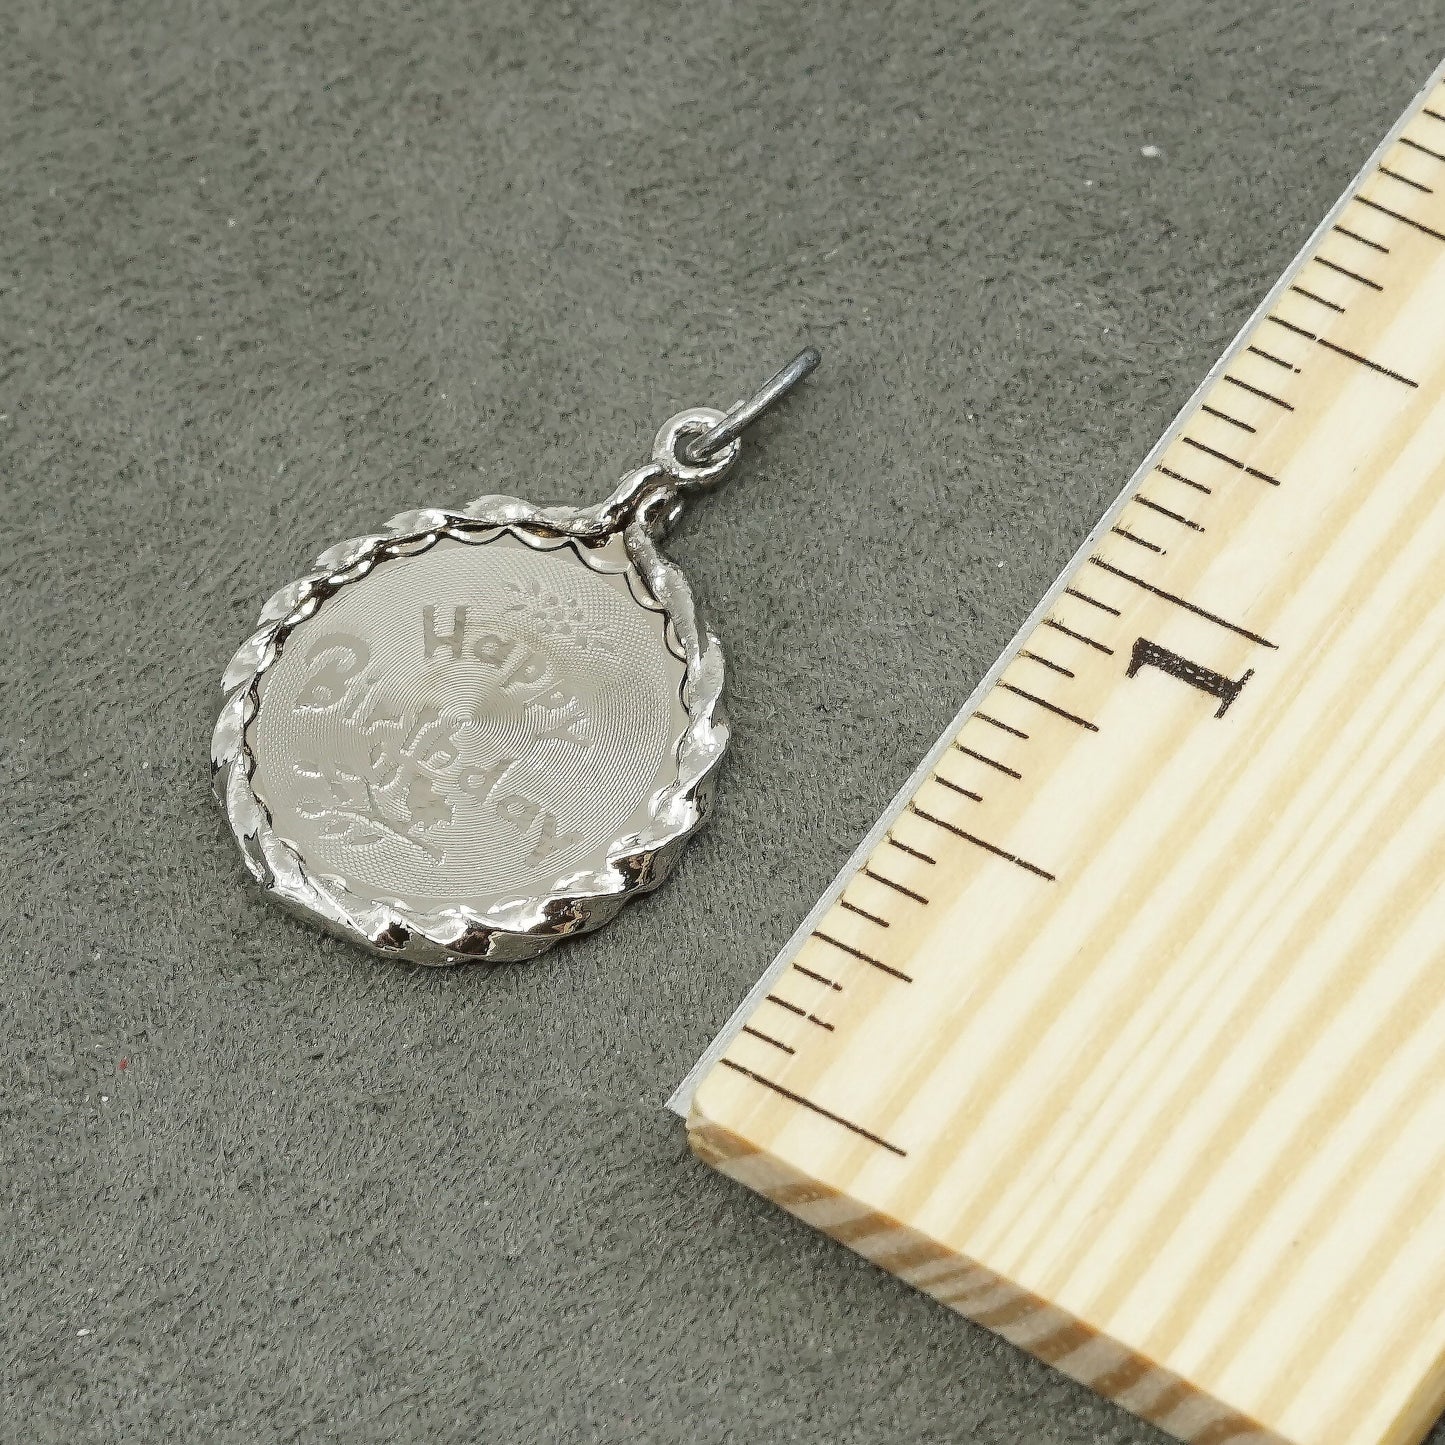 vtg Sterling silver handmade charm, 925 pendant engraved "happy birthday"